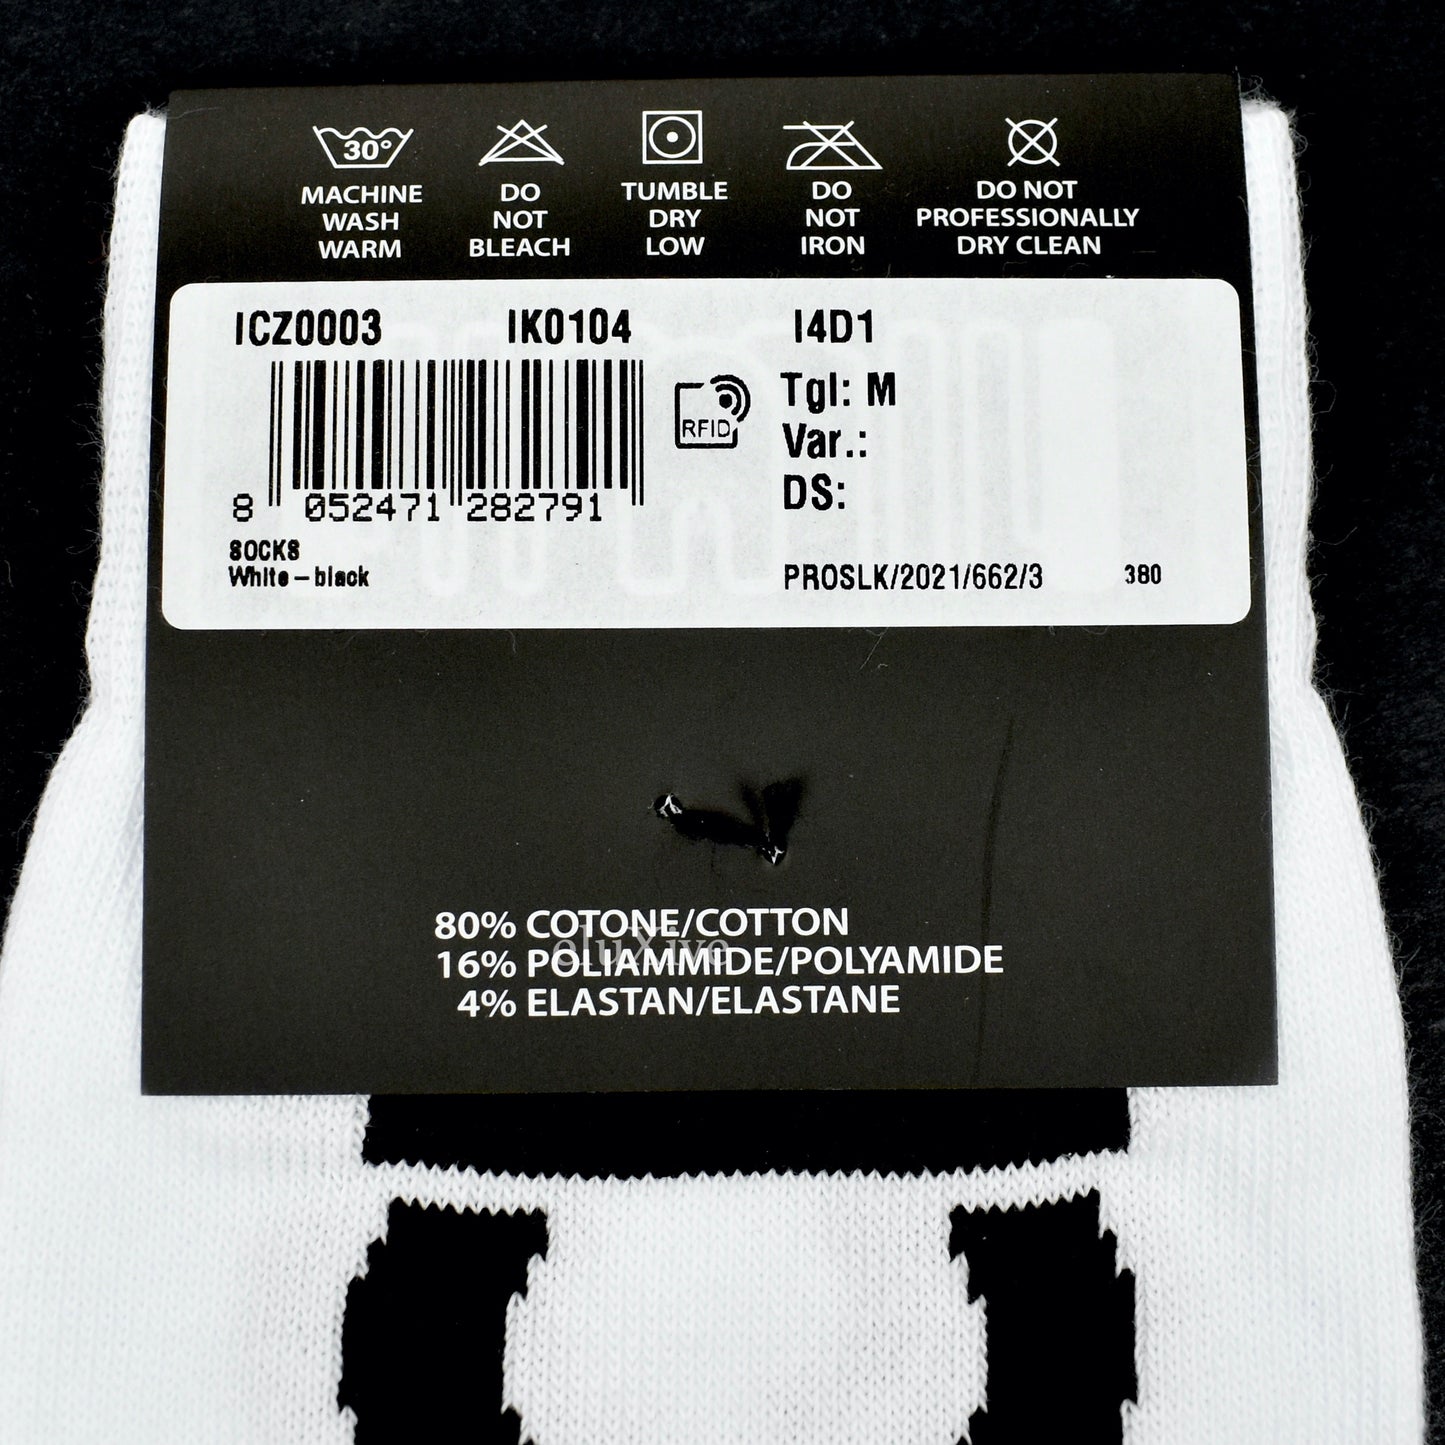 Versace - White / Black Logo Knit Crew Socks